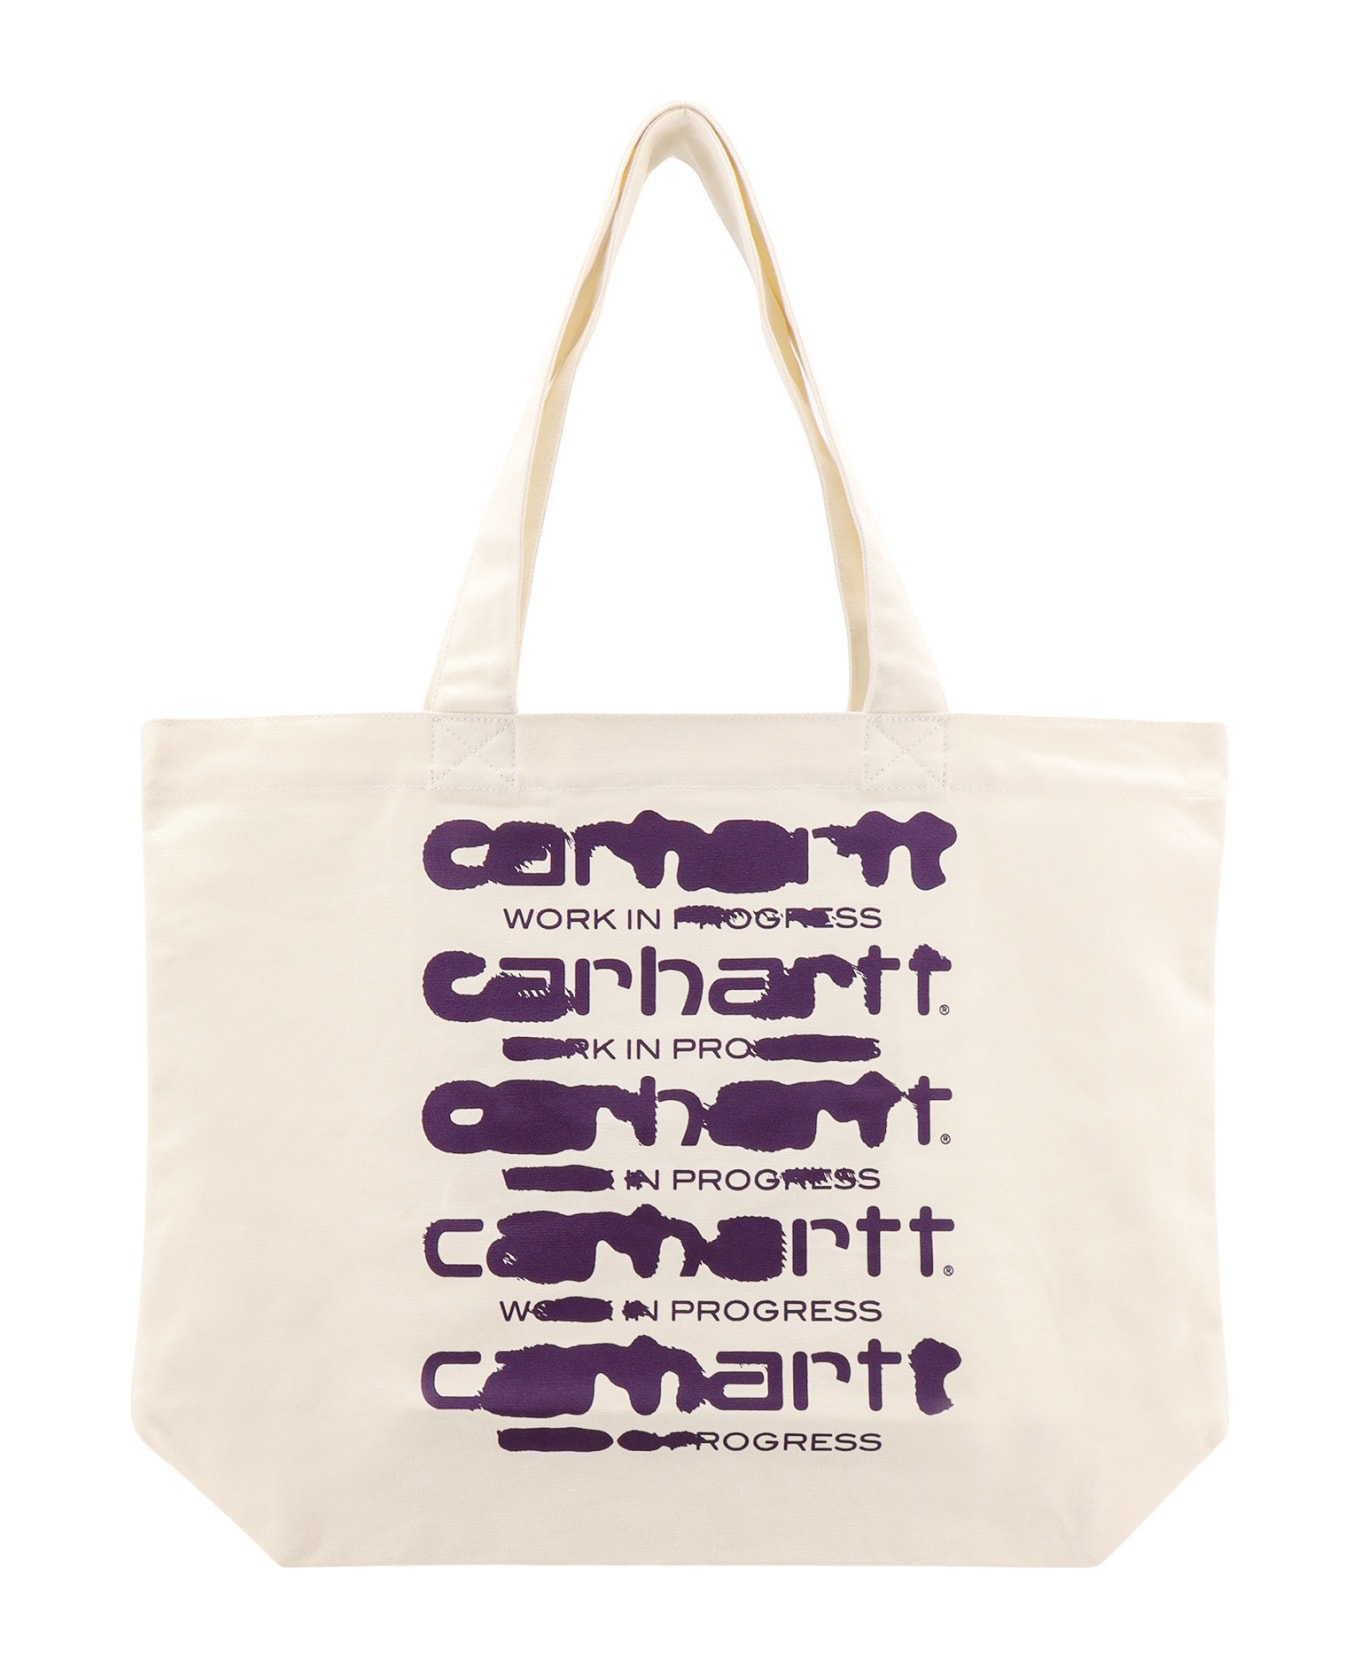 Carhartt Shoulder Bag - White